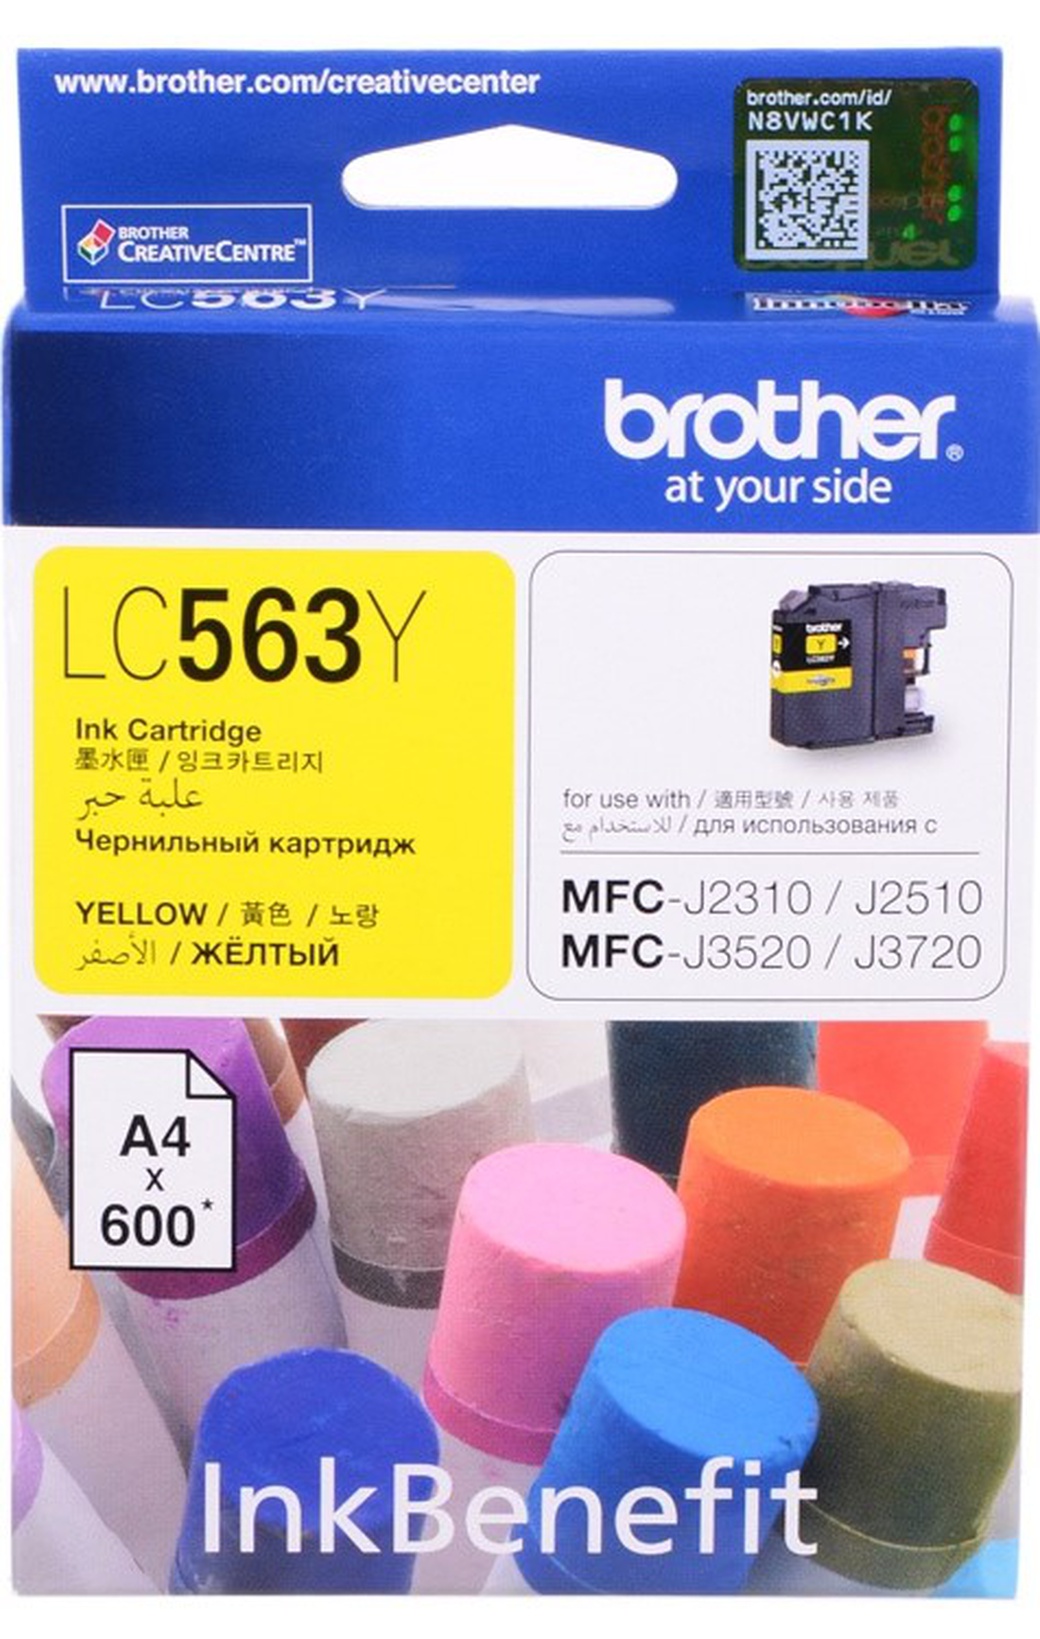 Струйный картридж LC563 жёлтый для MFC-J2310, MFC-J2510 (600 стр.) фото